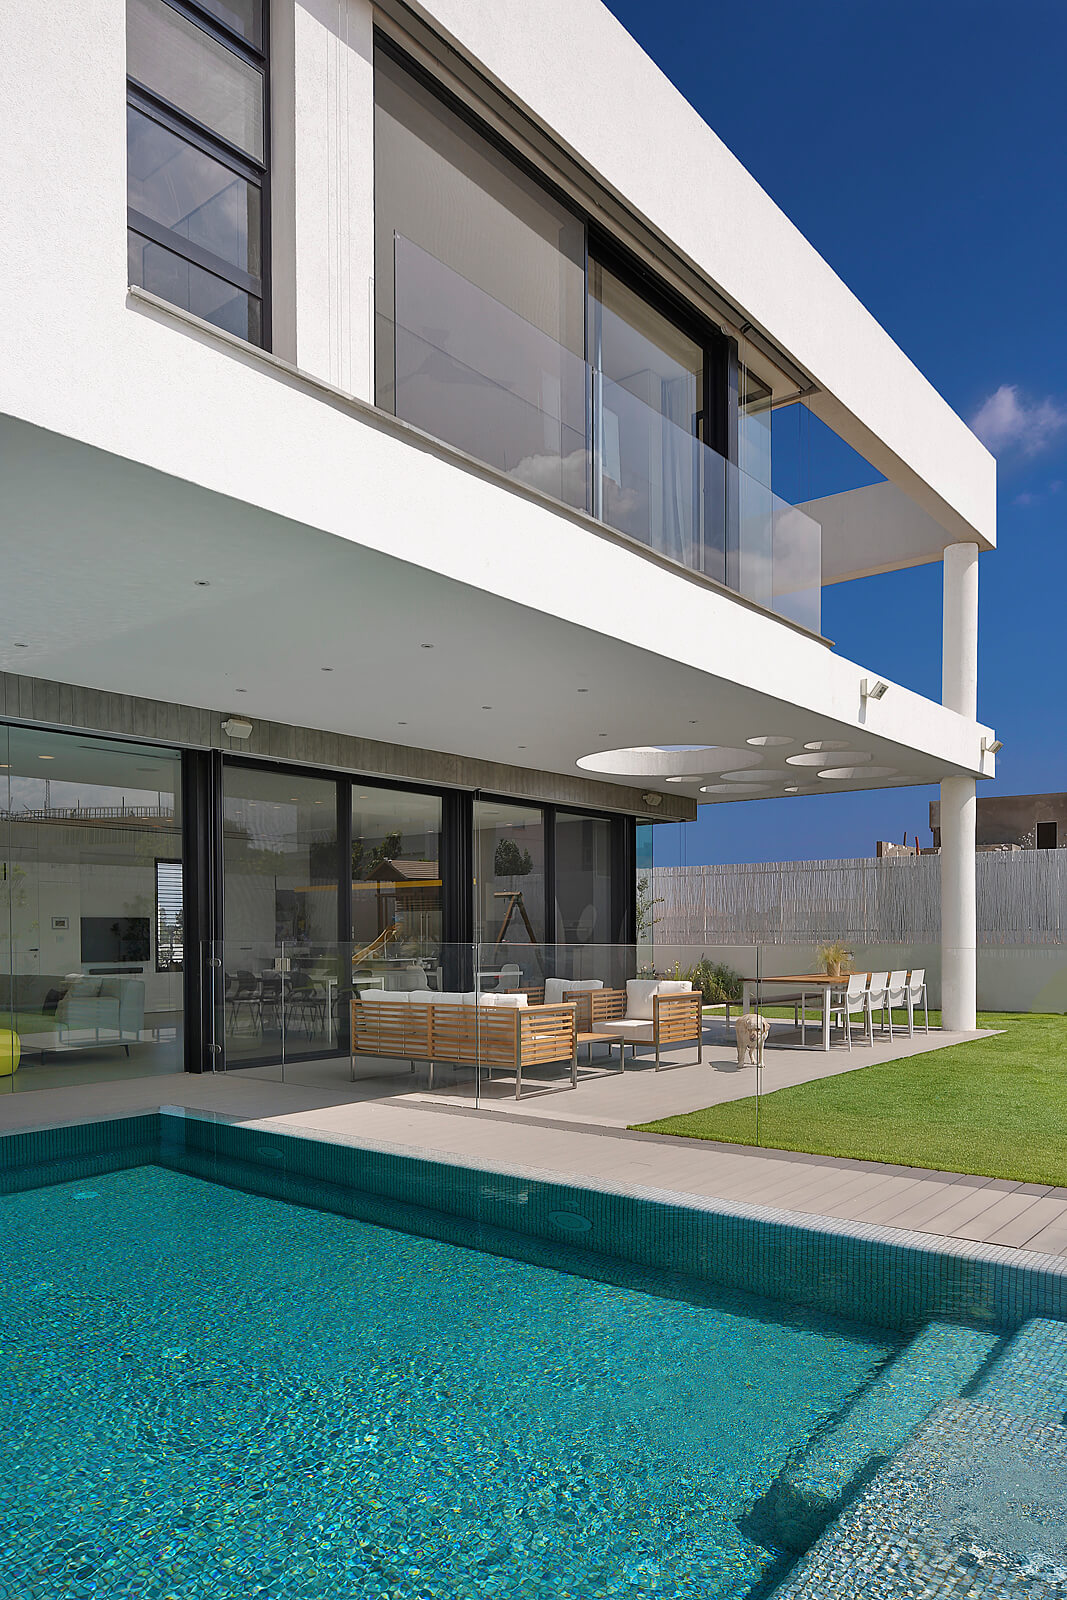 ZA House by Shachar Rozenfeld Architects